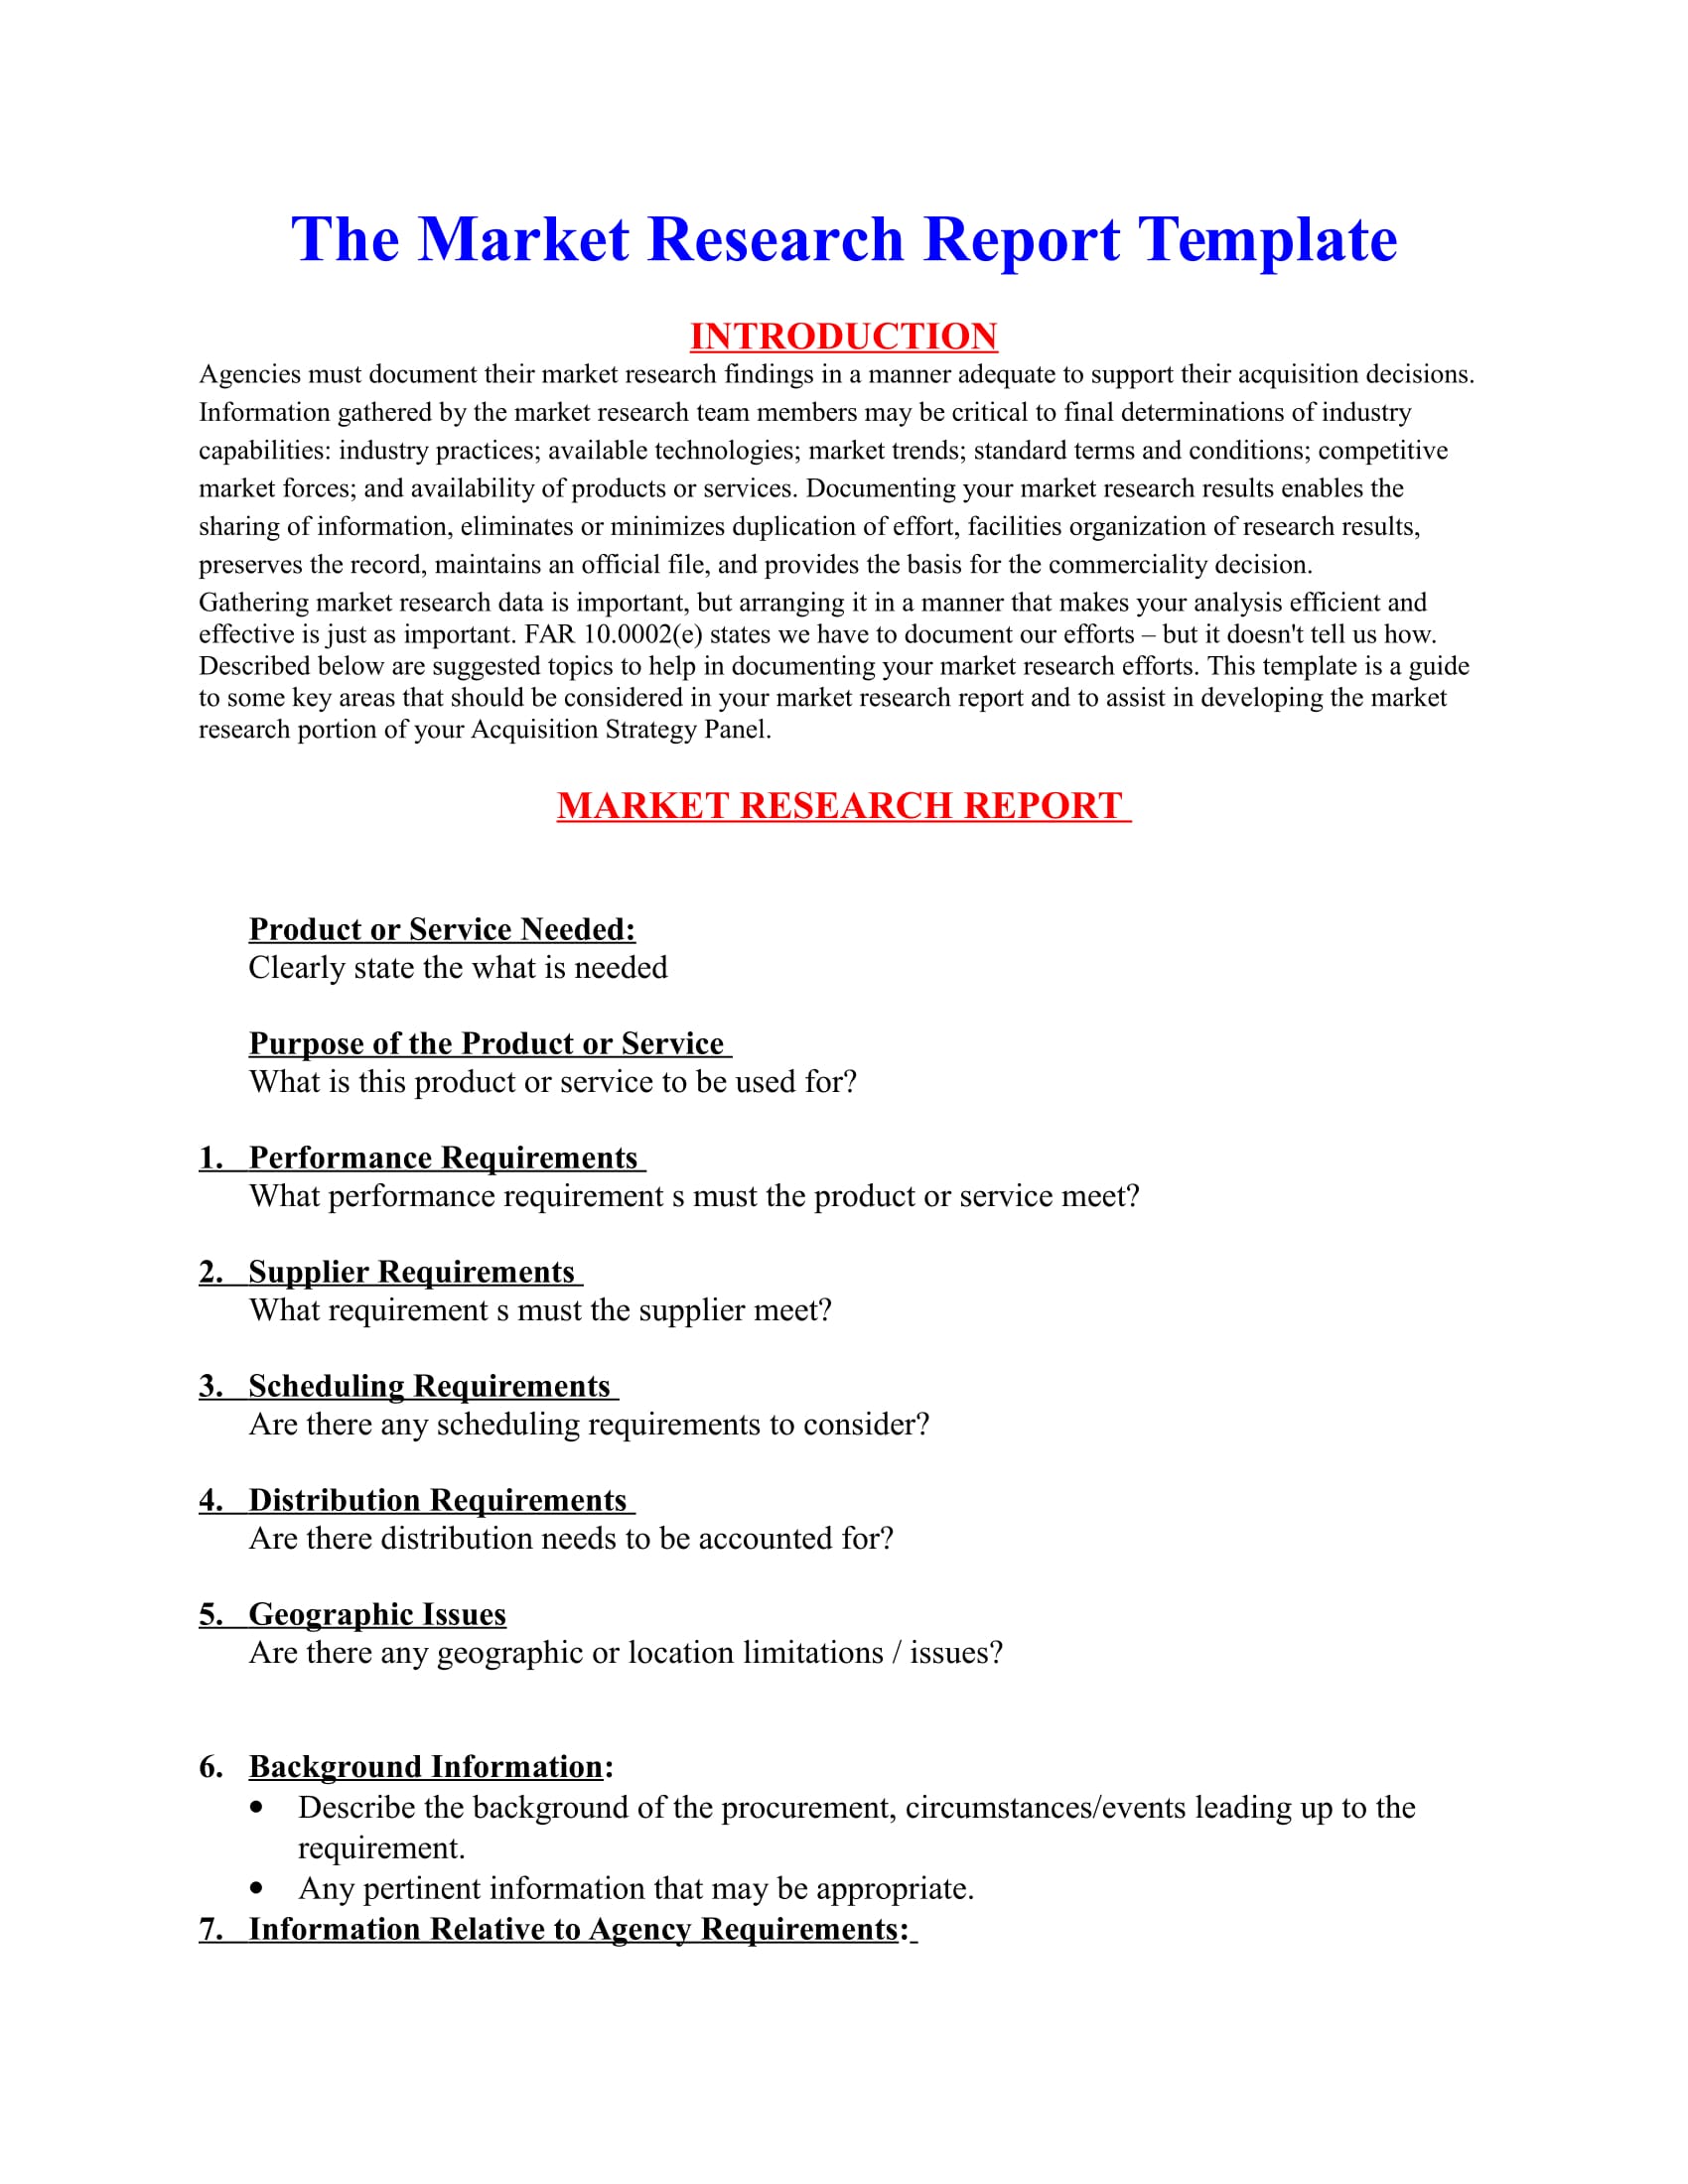 College marketing anaysis paper